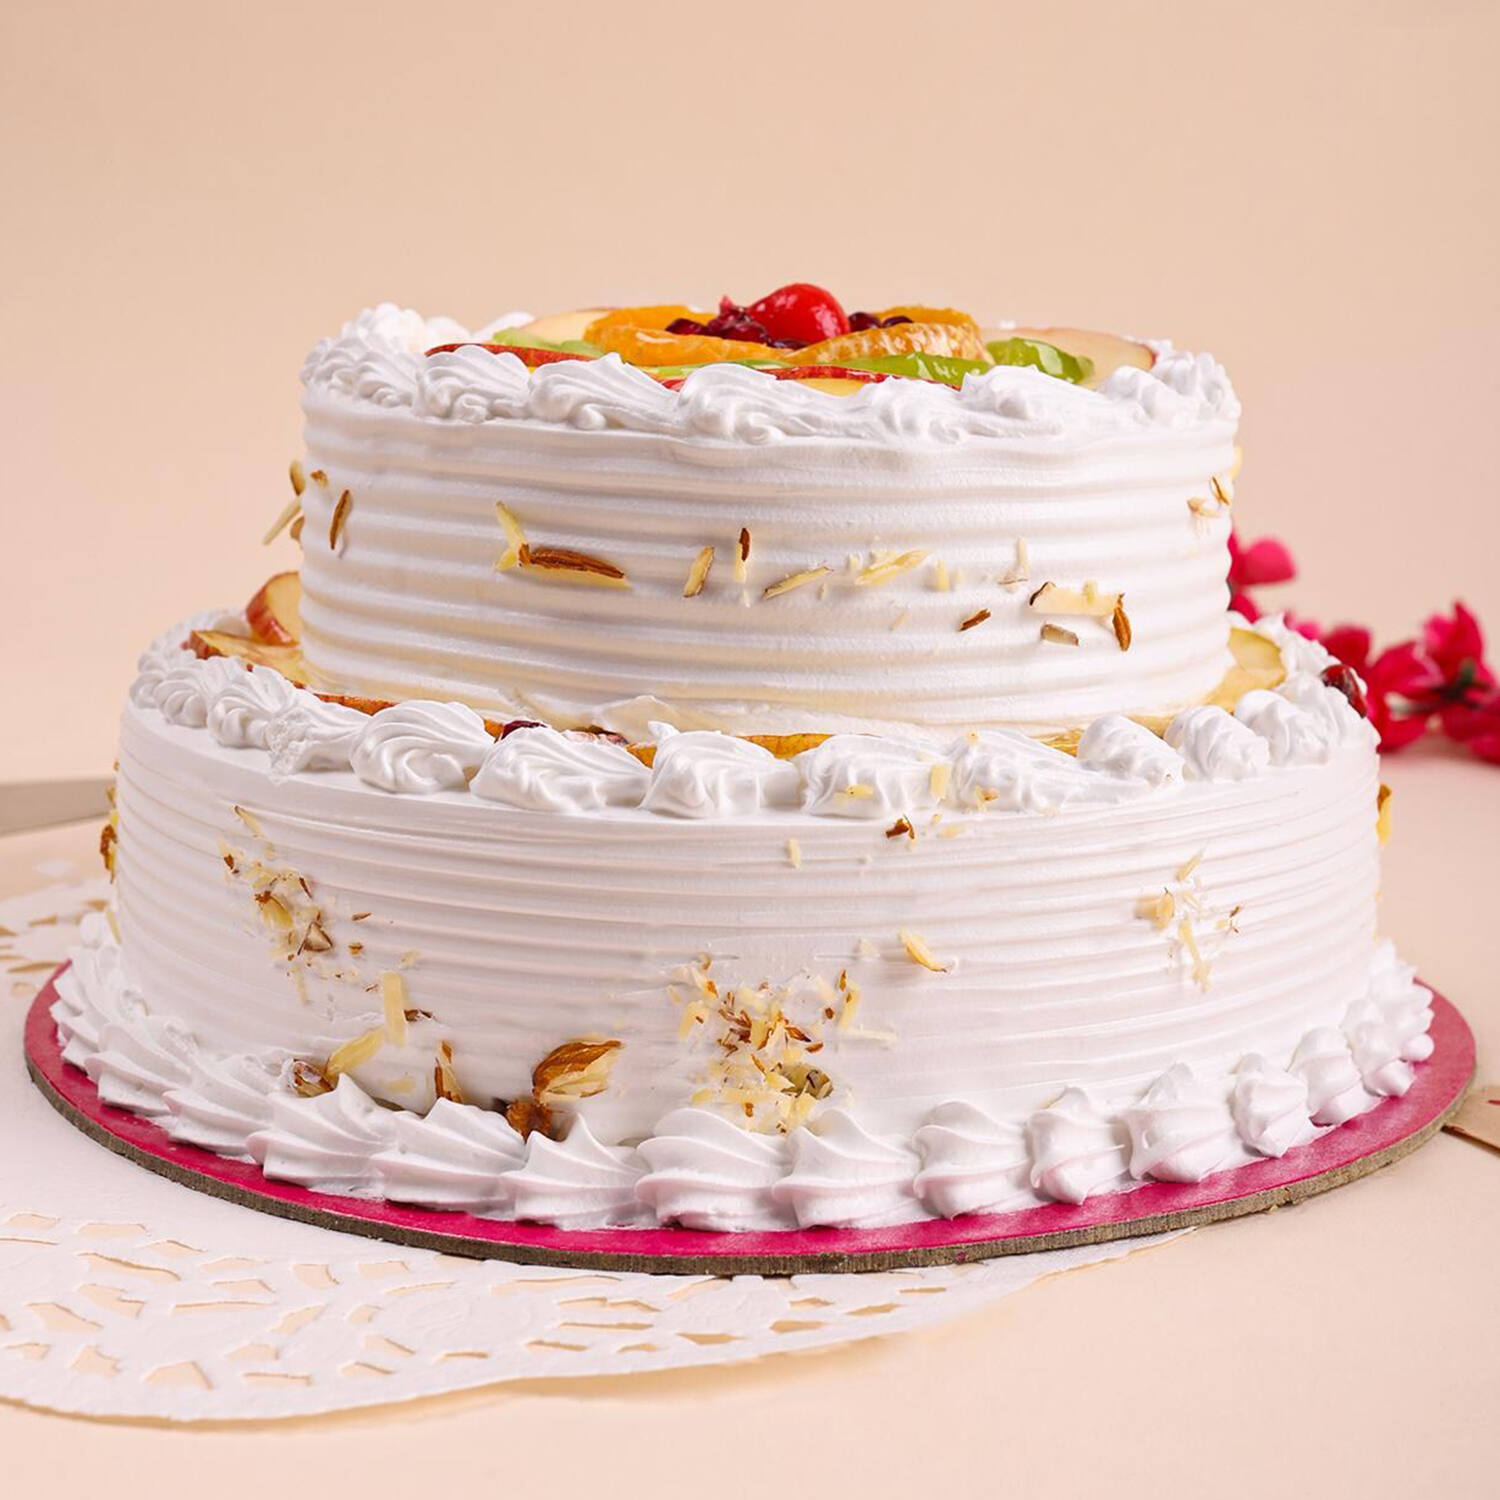 Celebrate cakes - Vanilla cake (6kg) 3-step Happy anniversary aunty #Tezpur  #Assam #tezbuzz #tezcollege #Darang #cake #design #dessert  #TezpurUniversity #Sonipur #chokbazar #followforfollowback #anniversary |  Facebook